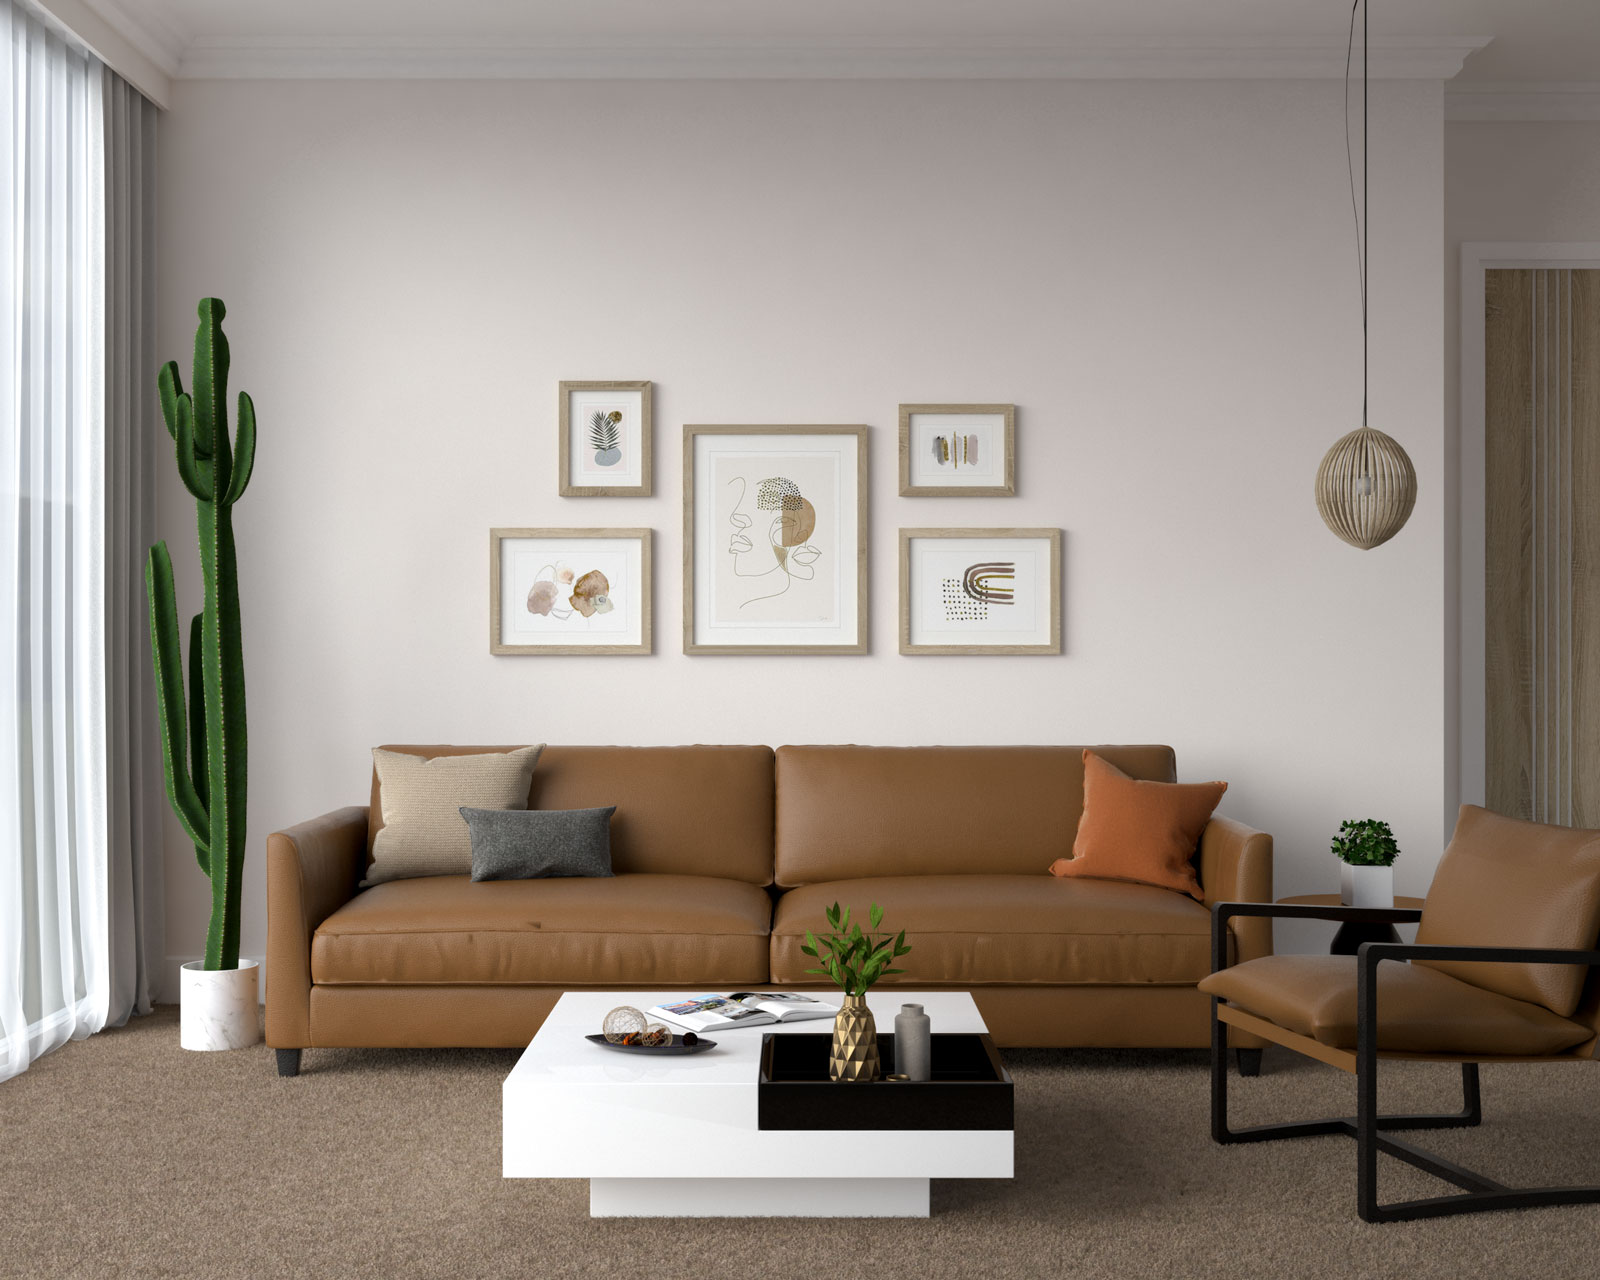 What Home Interior Colour Best Suits A Brown Carpet